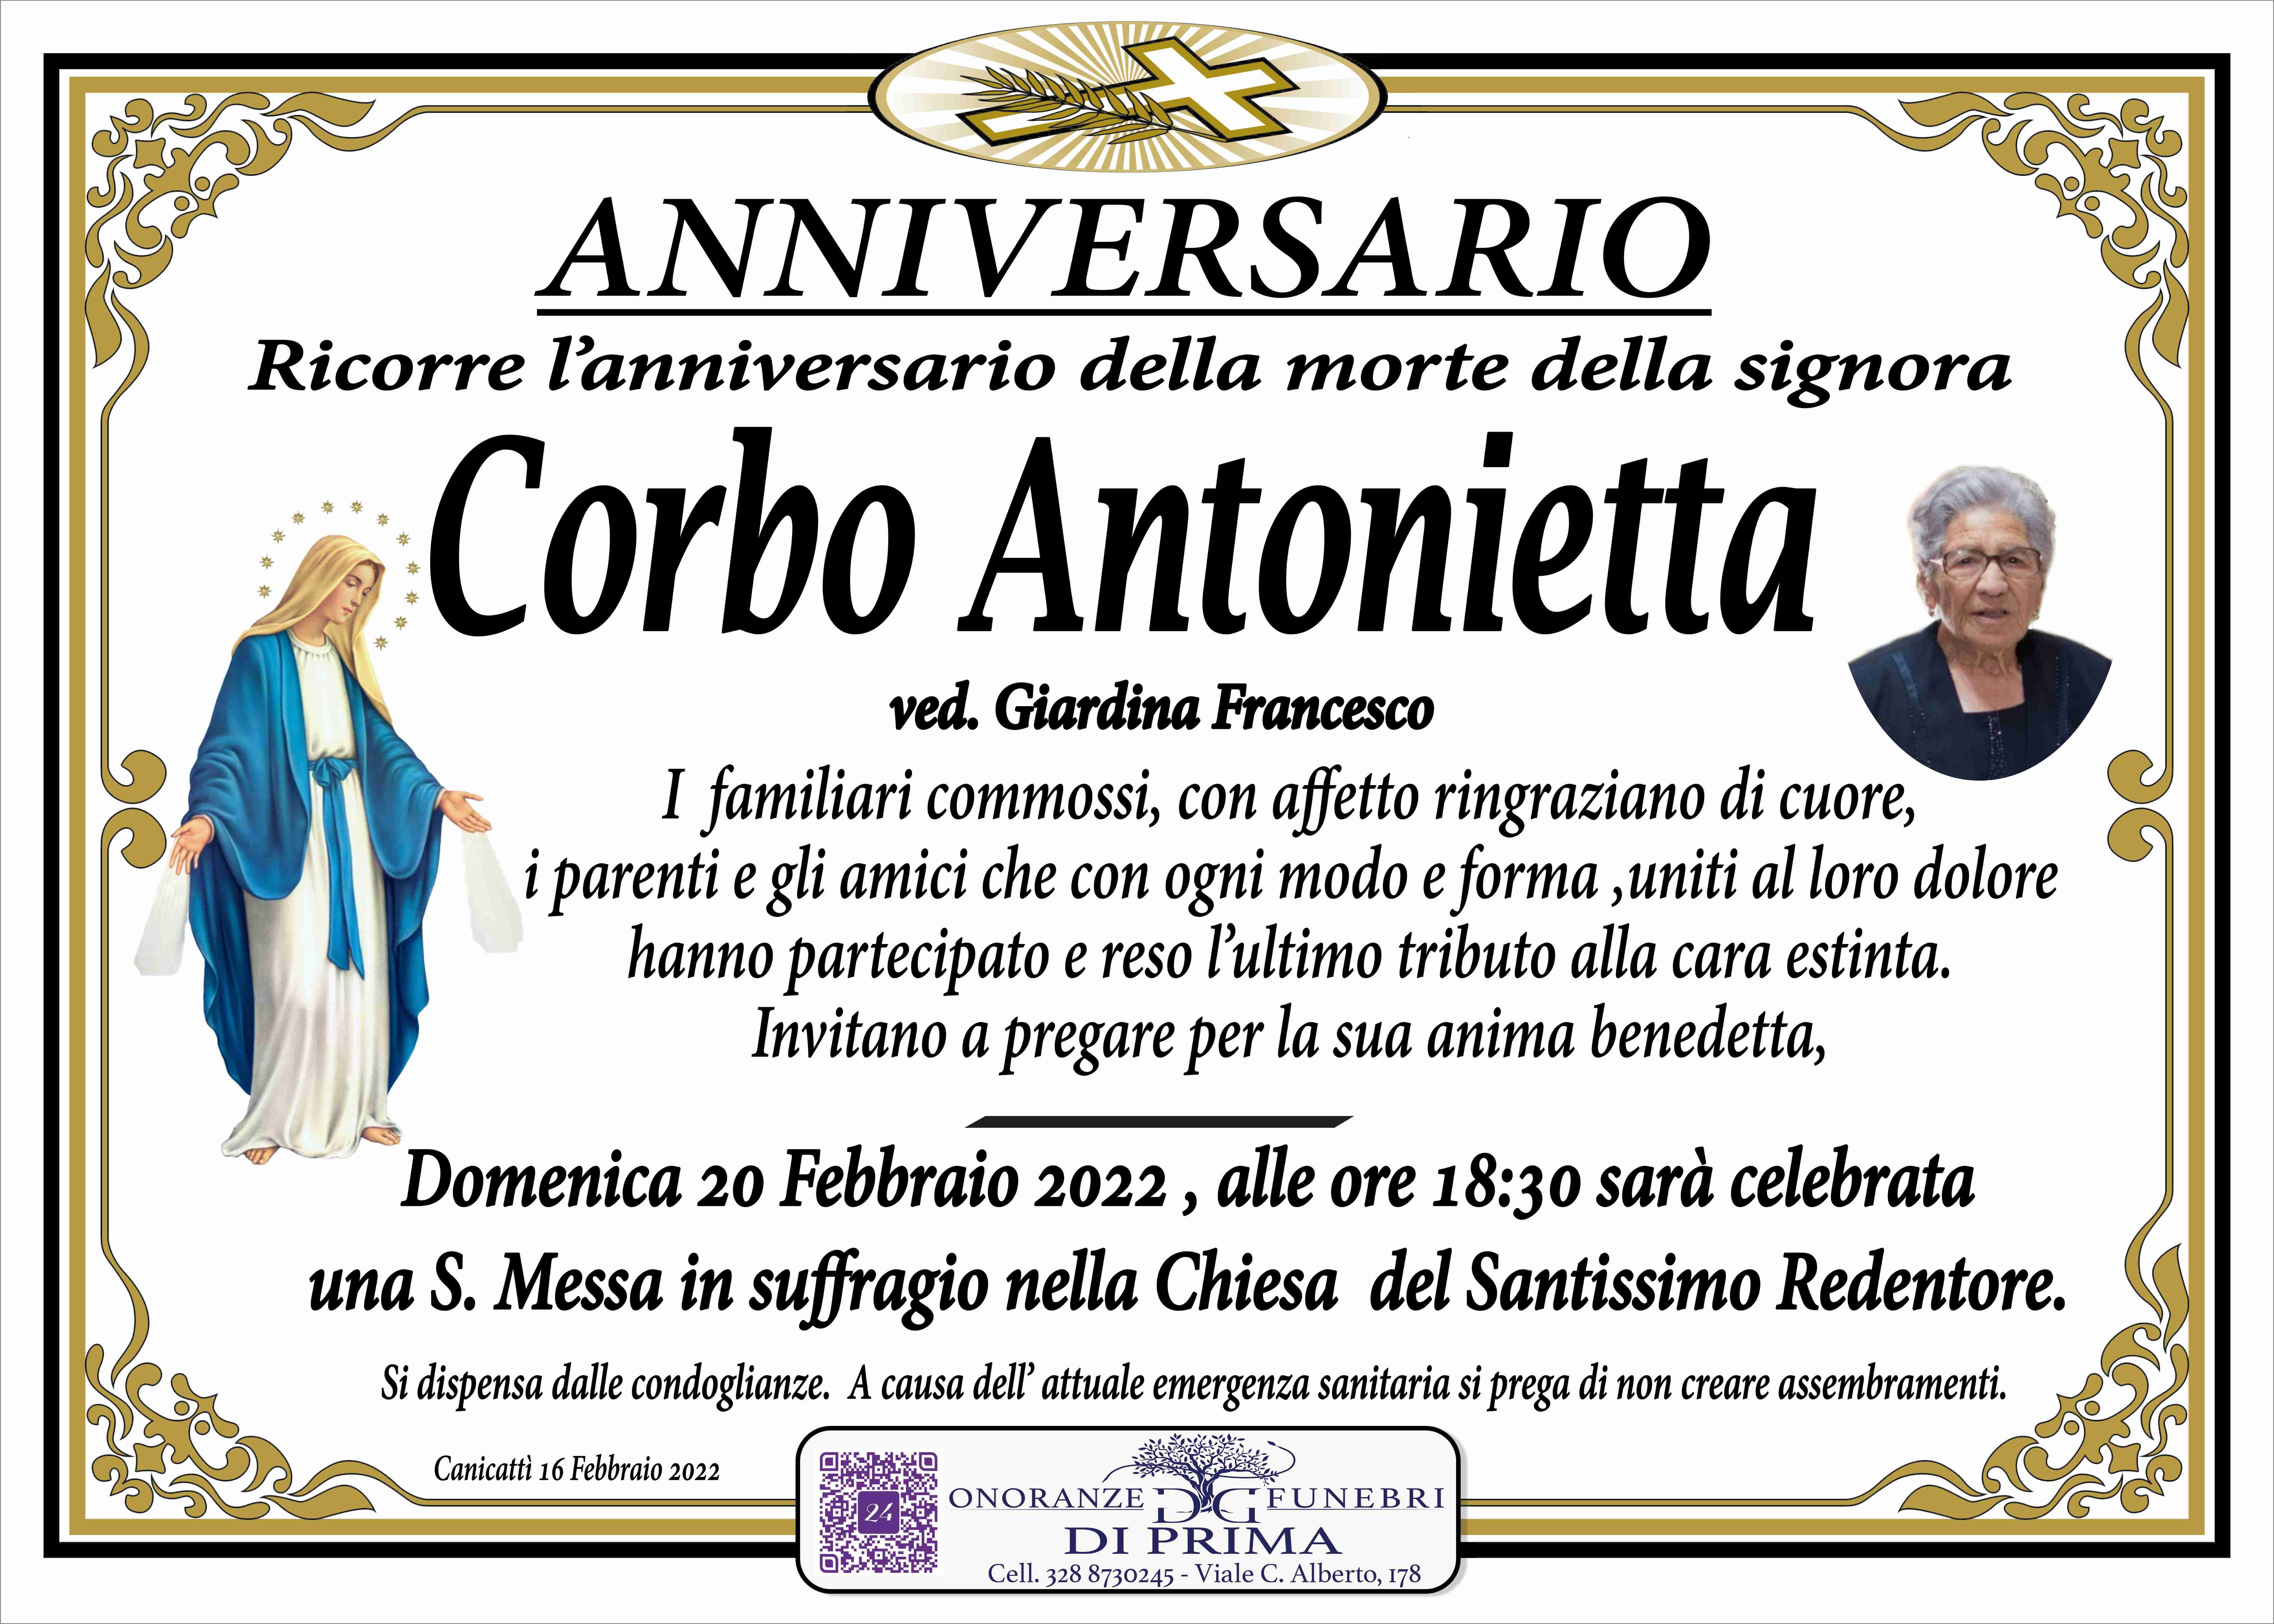 Antonietta Corbo